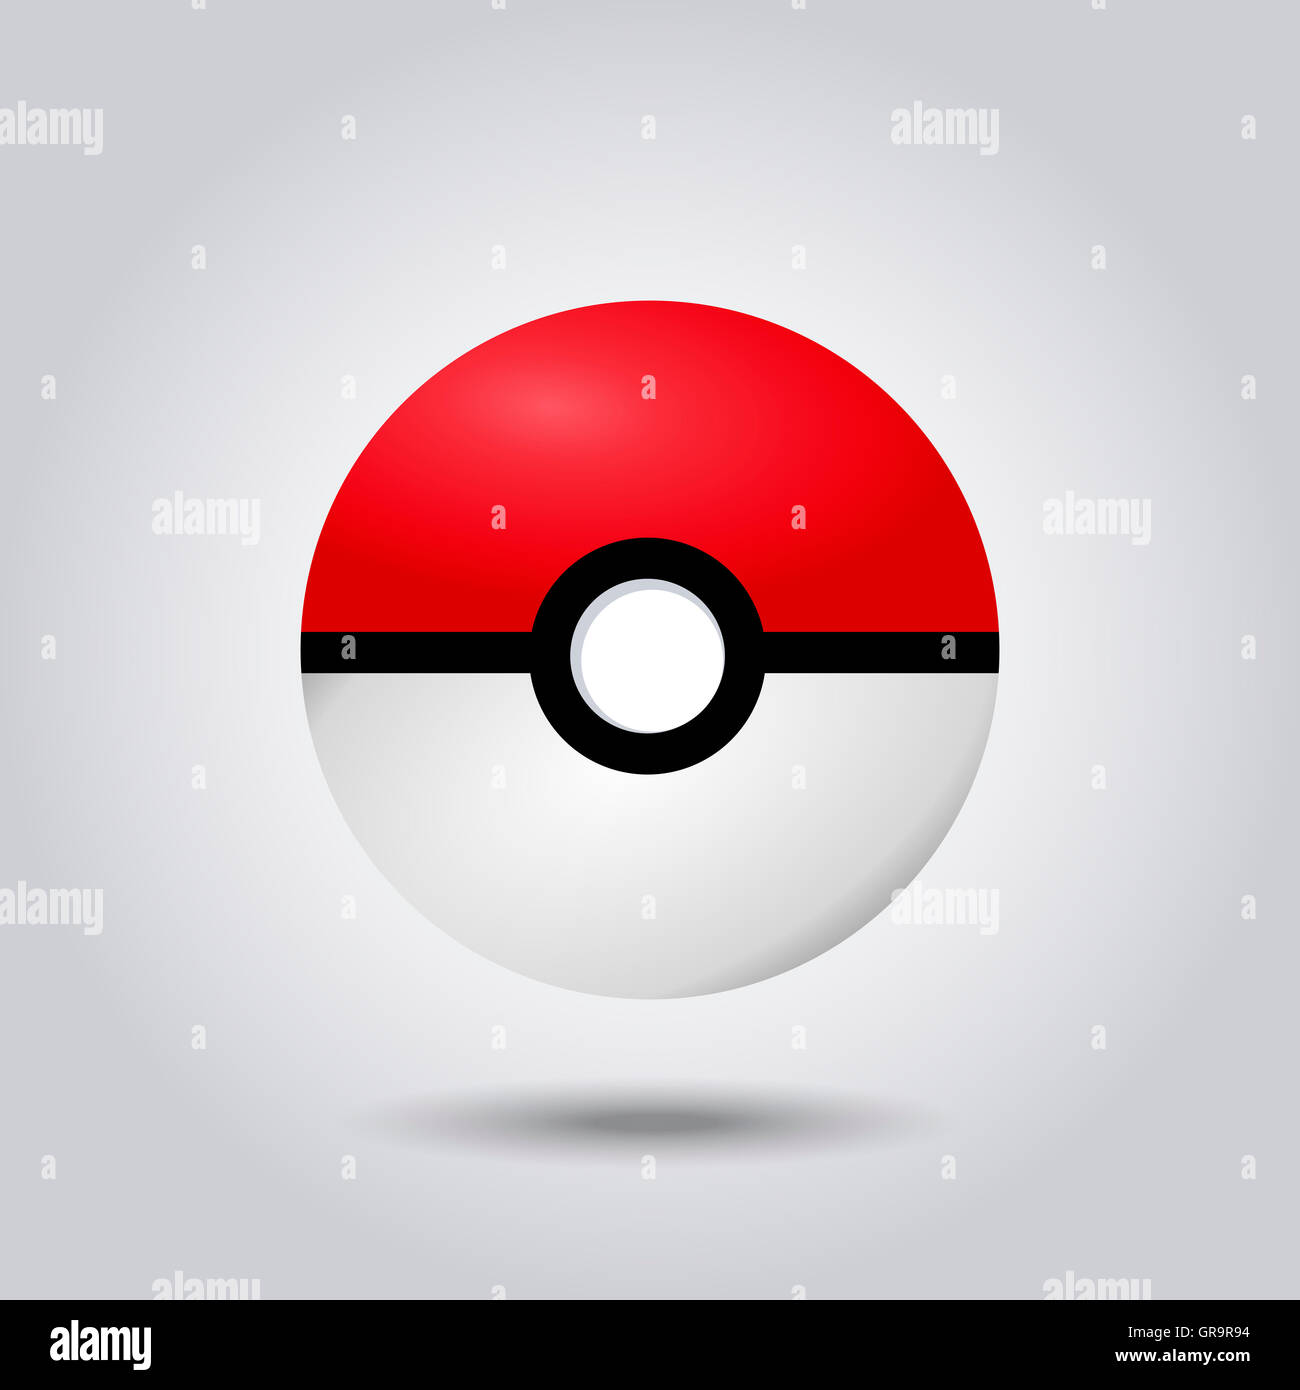 Pokemon Go logo vortex, social networks, rainbow backgrounds